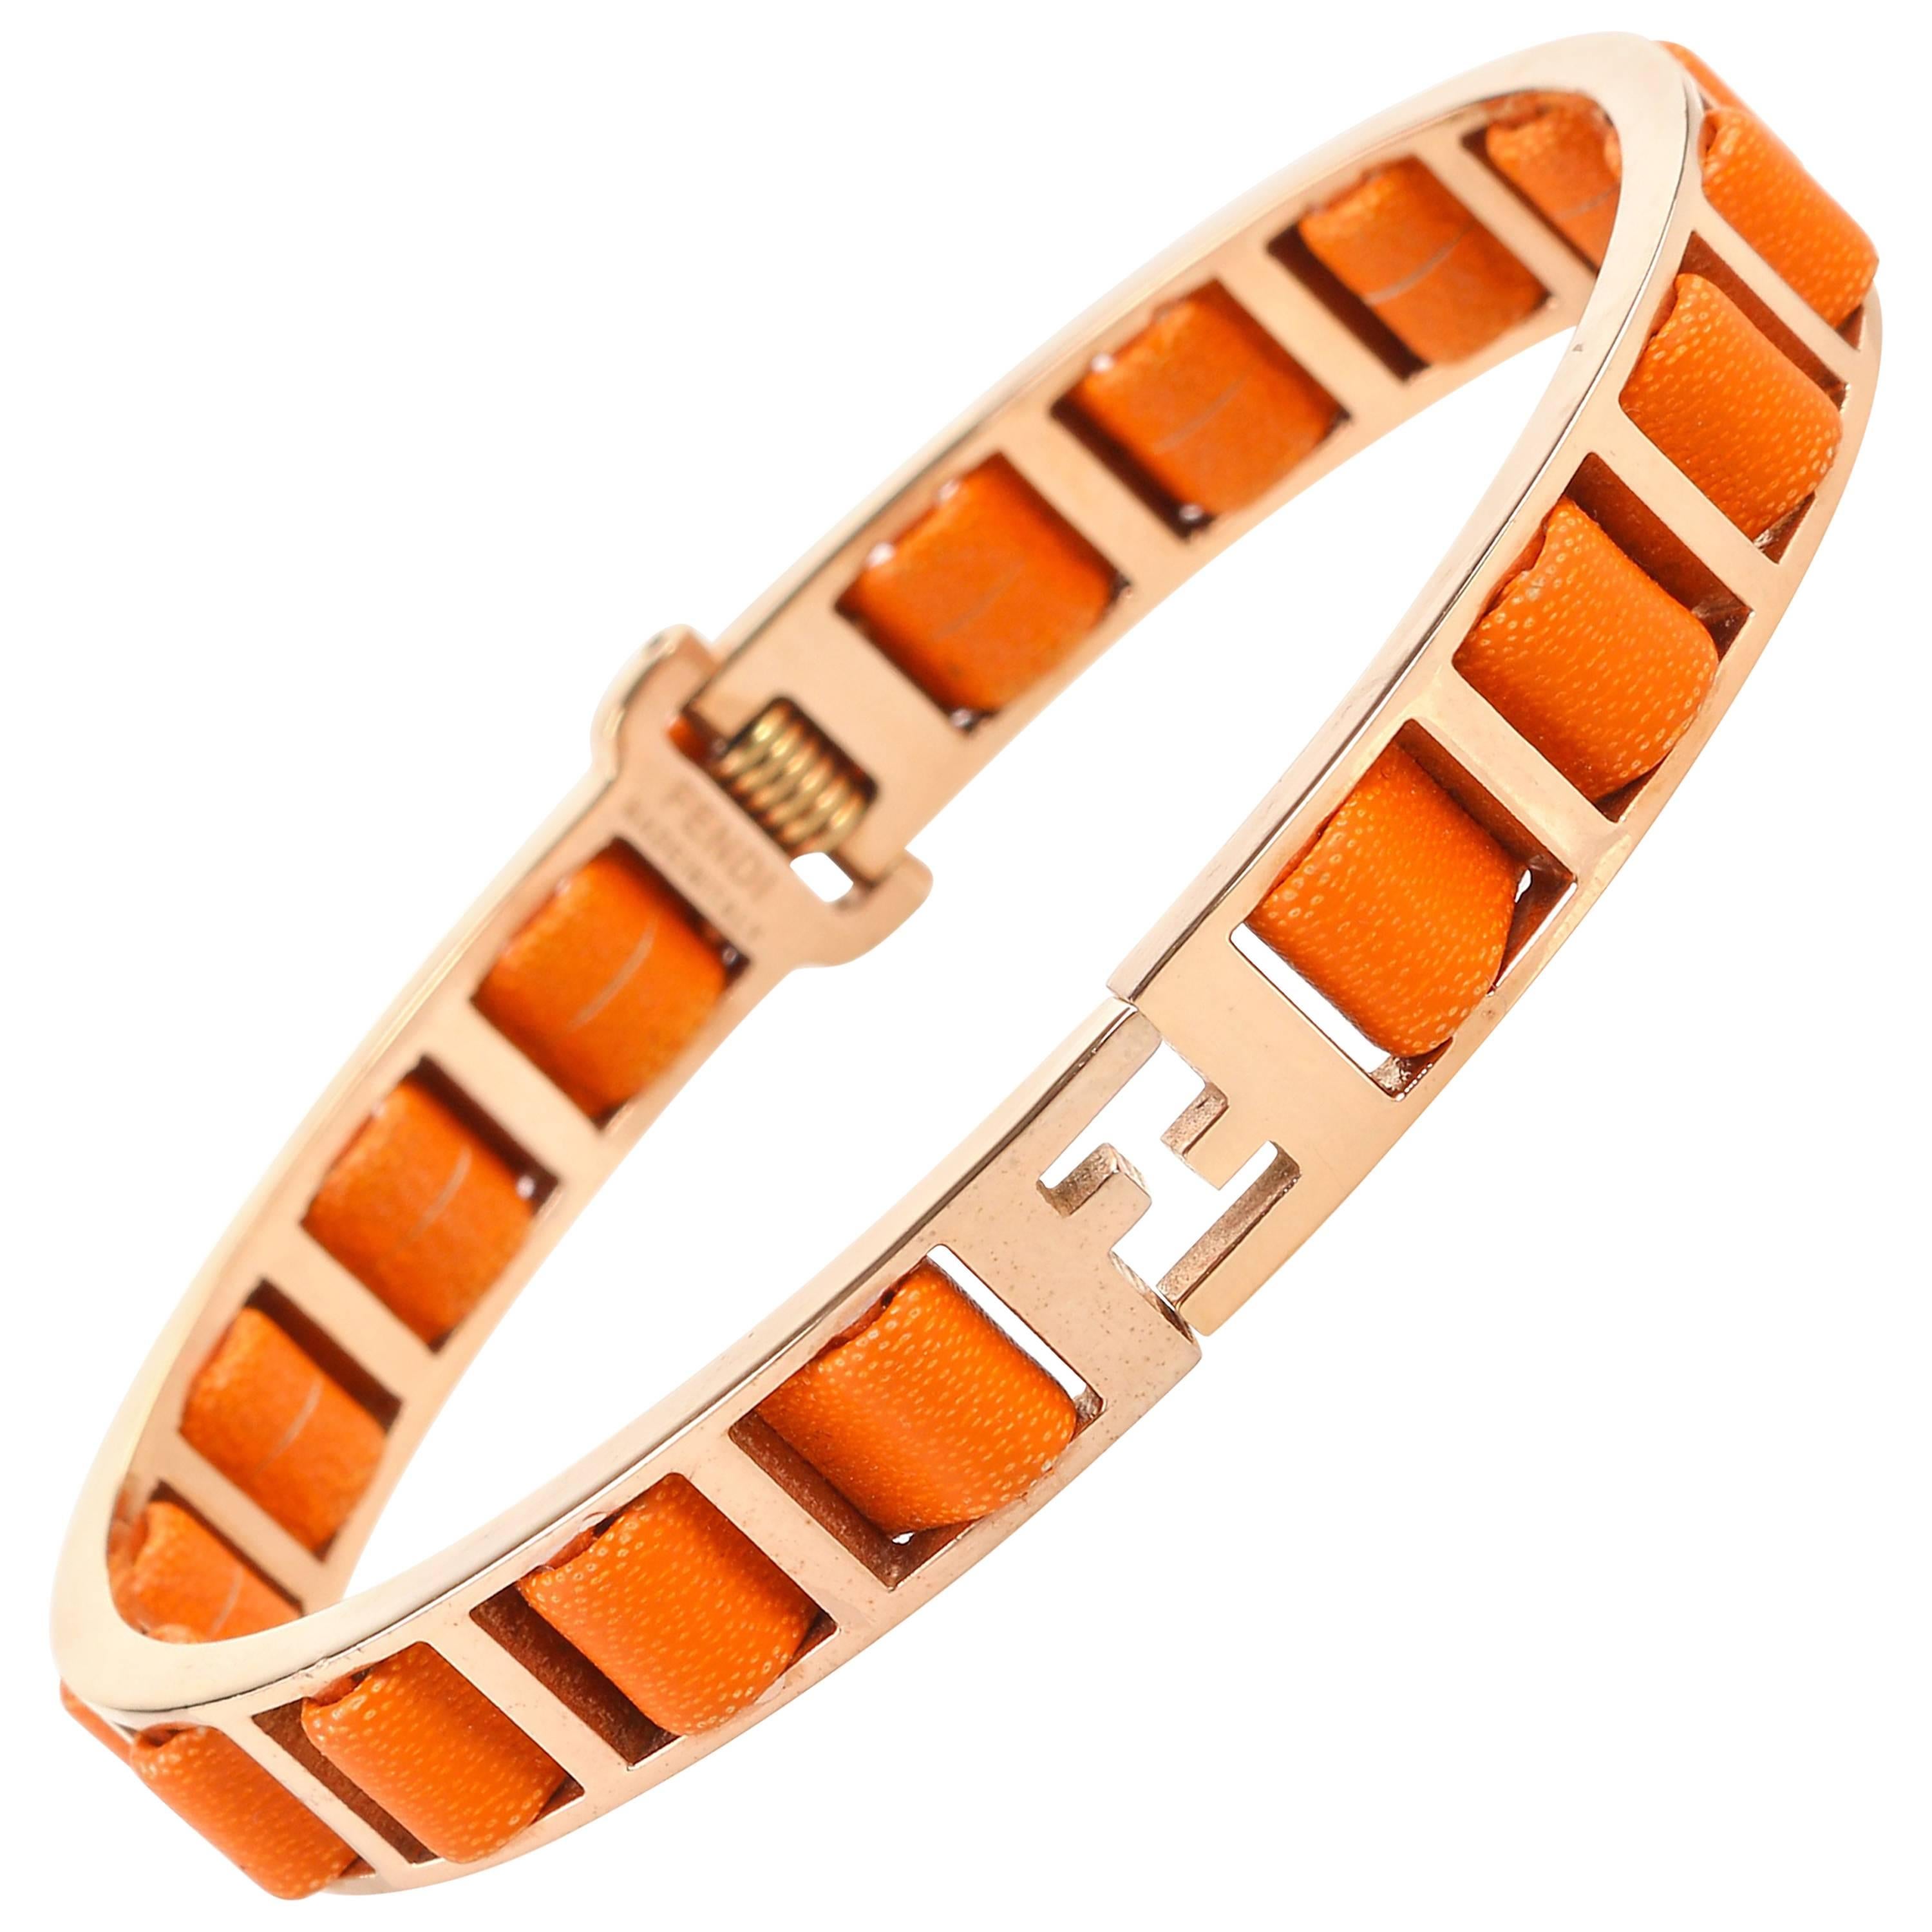 FENDI S/S 2011 "Fendista" Orange Woven Nappa Leather Gold Bangle Bracelet